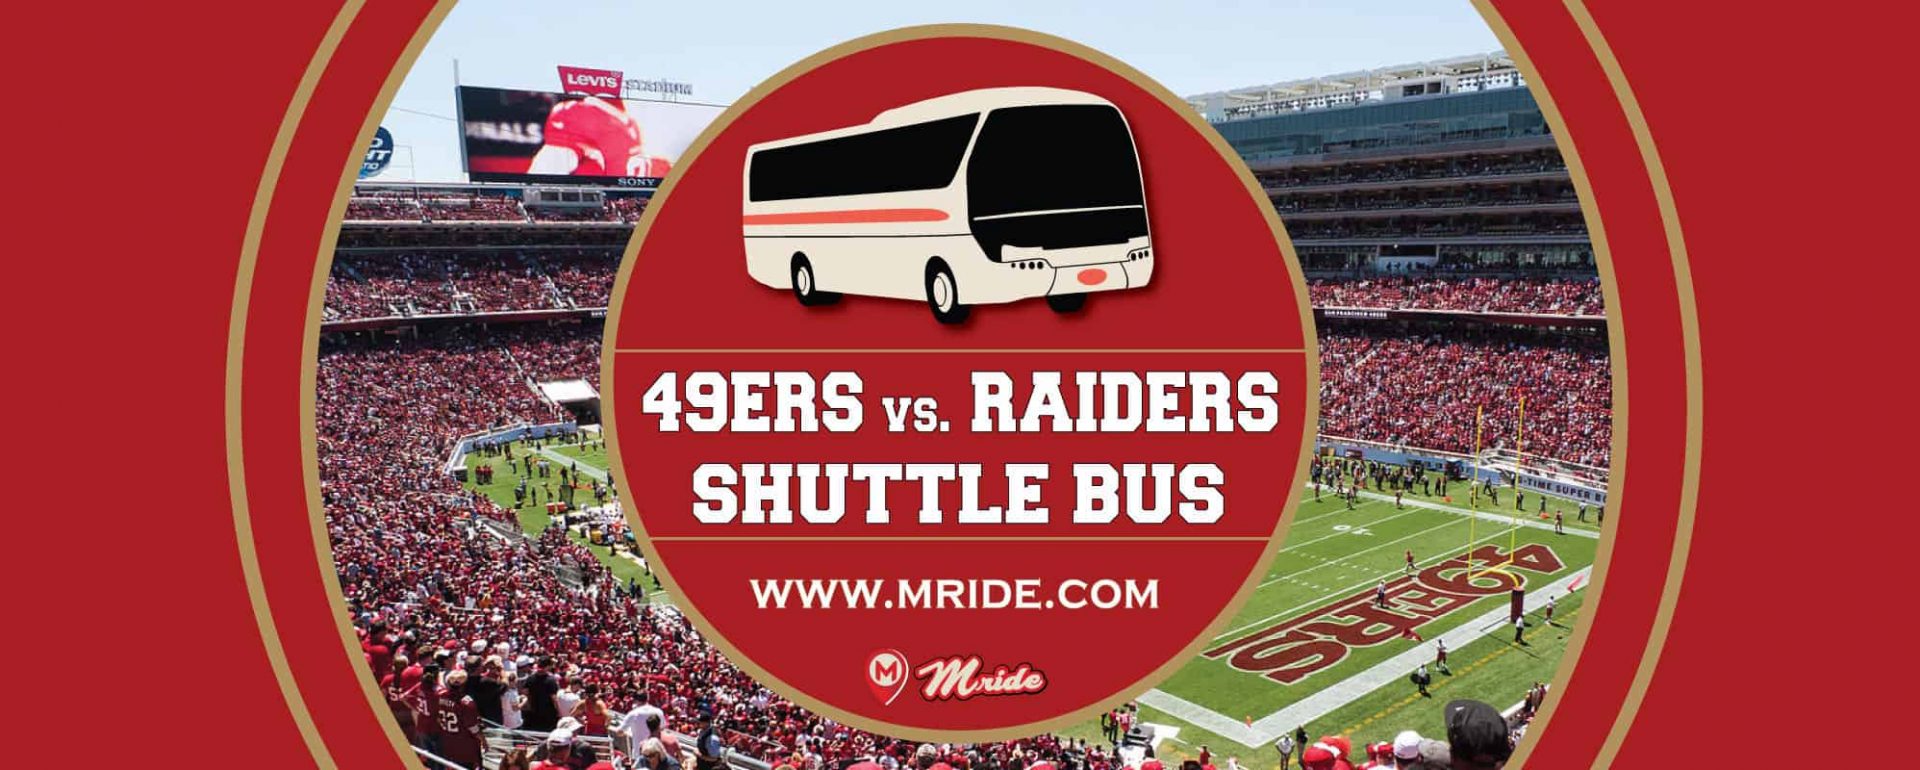 49ers vs. Raiders Shuttle Bus